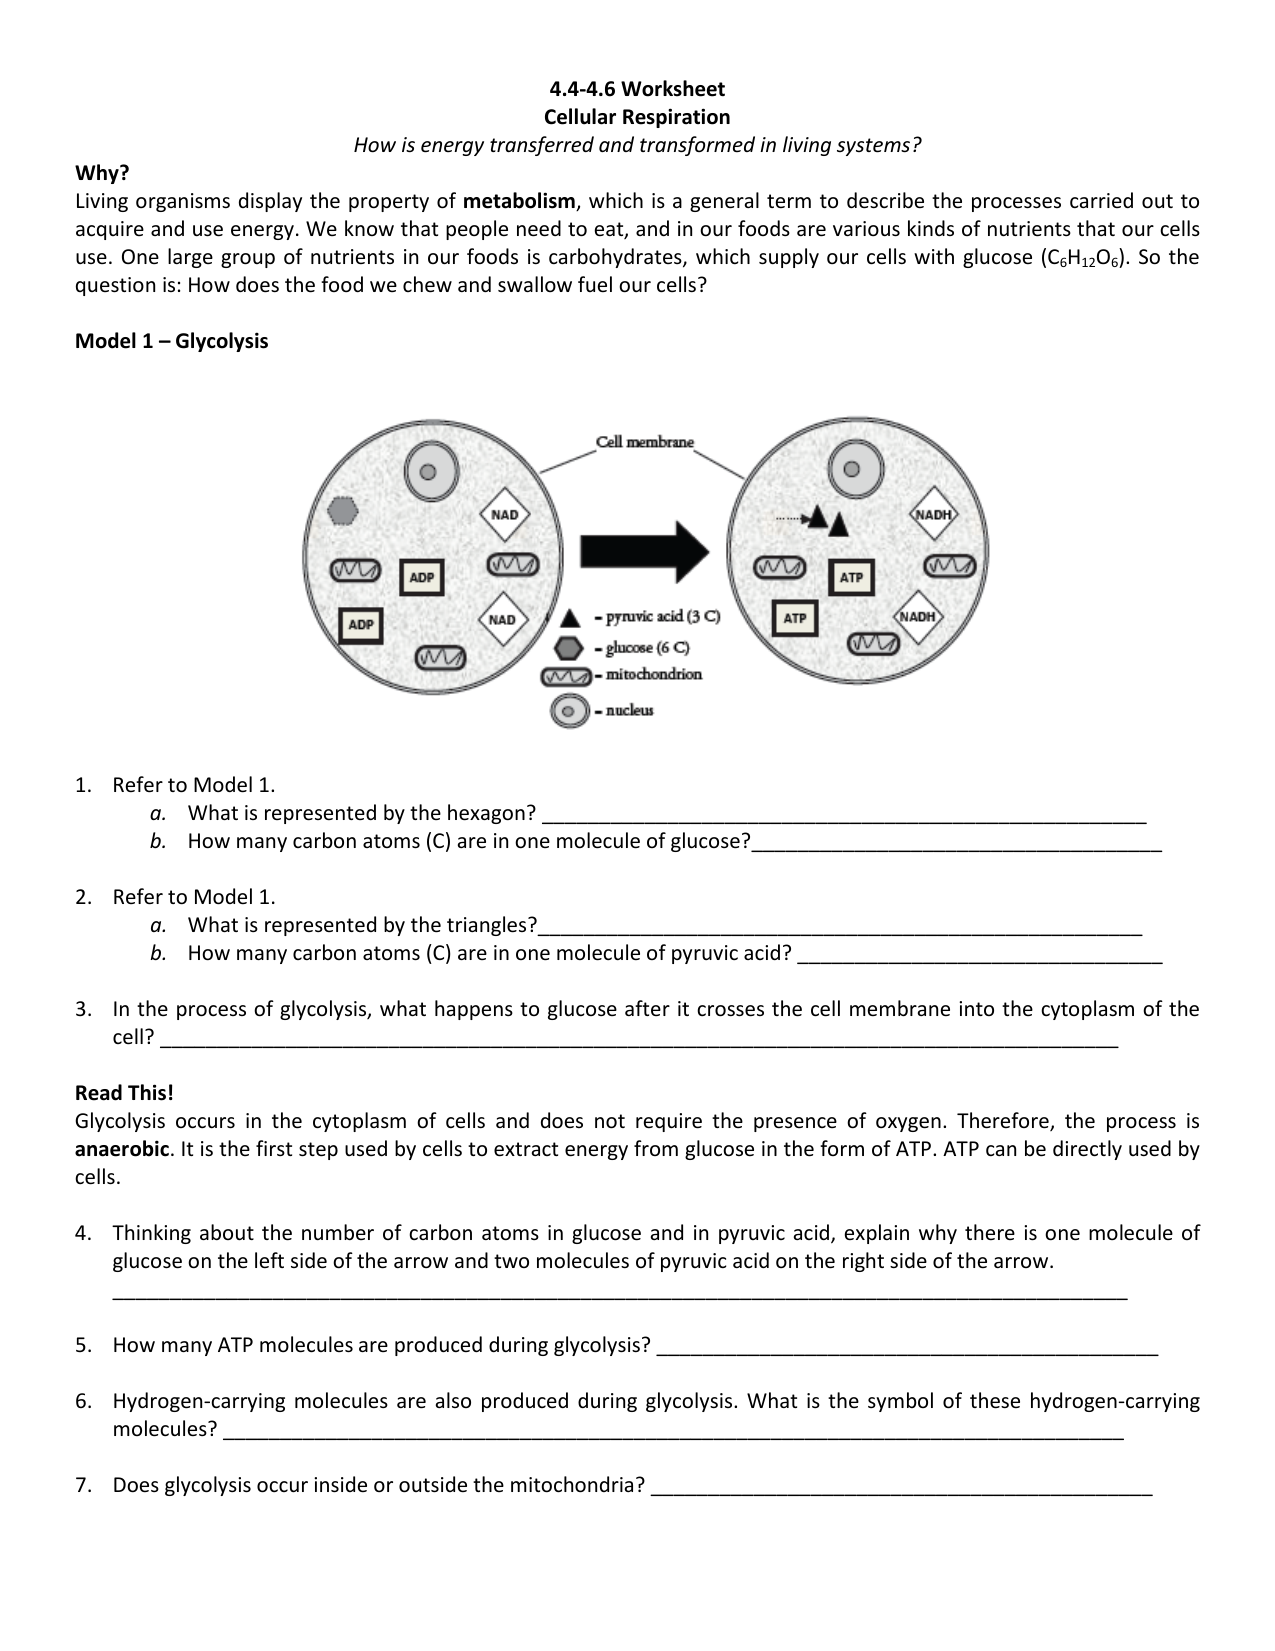 Cellular Respiration Pogil Worksheet Answer Key + My PDF